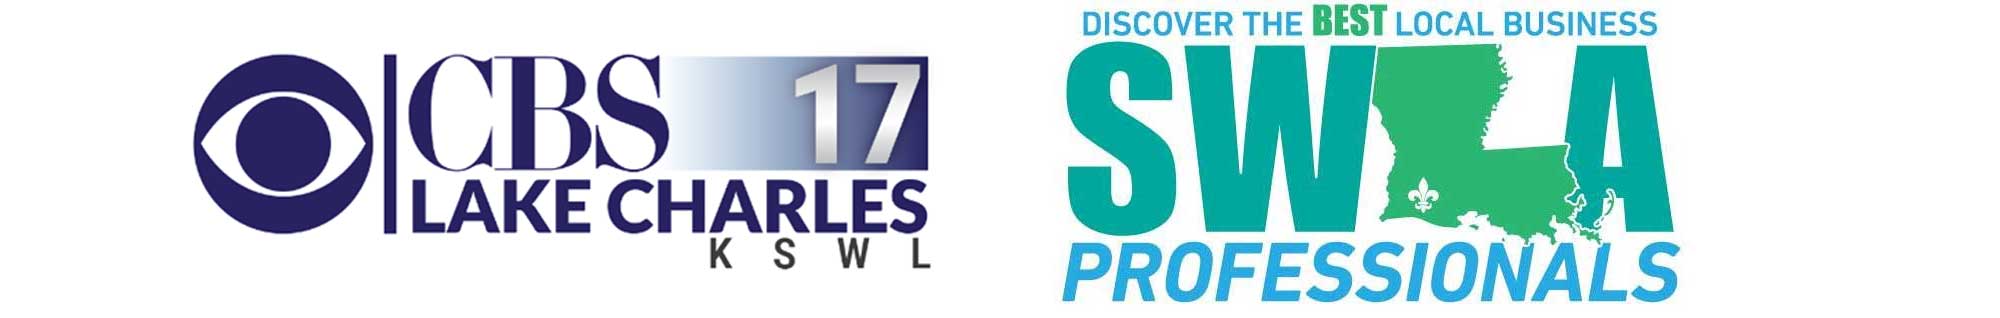 CBS 14 Lake Charles / SWLA Professionals